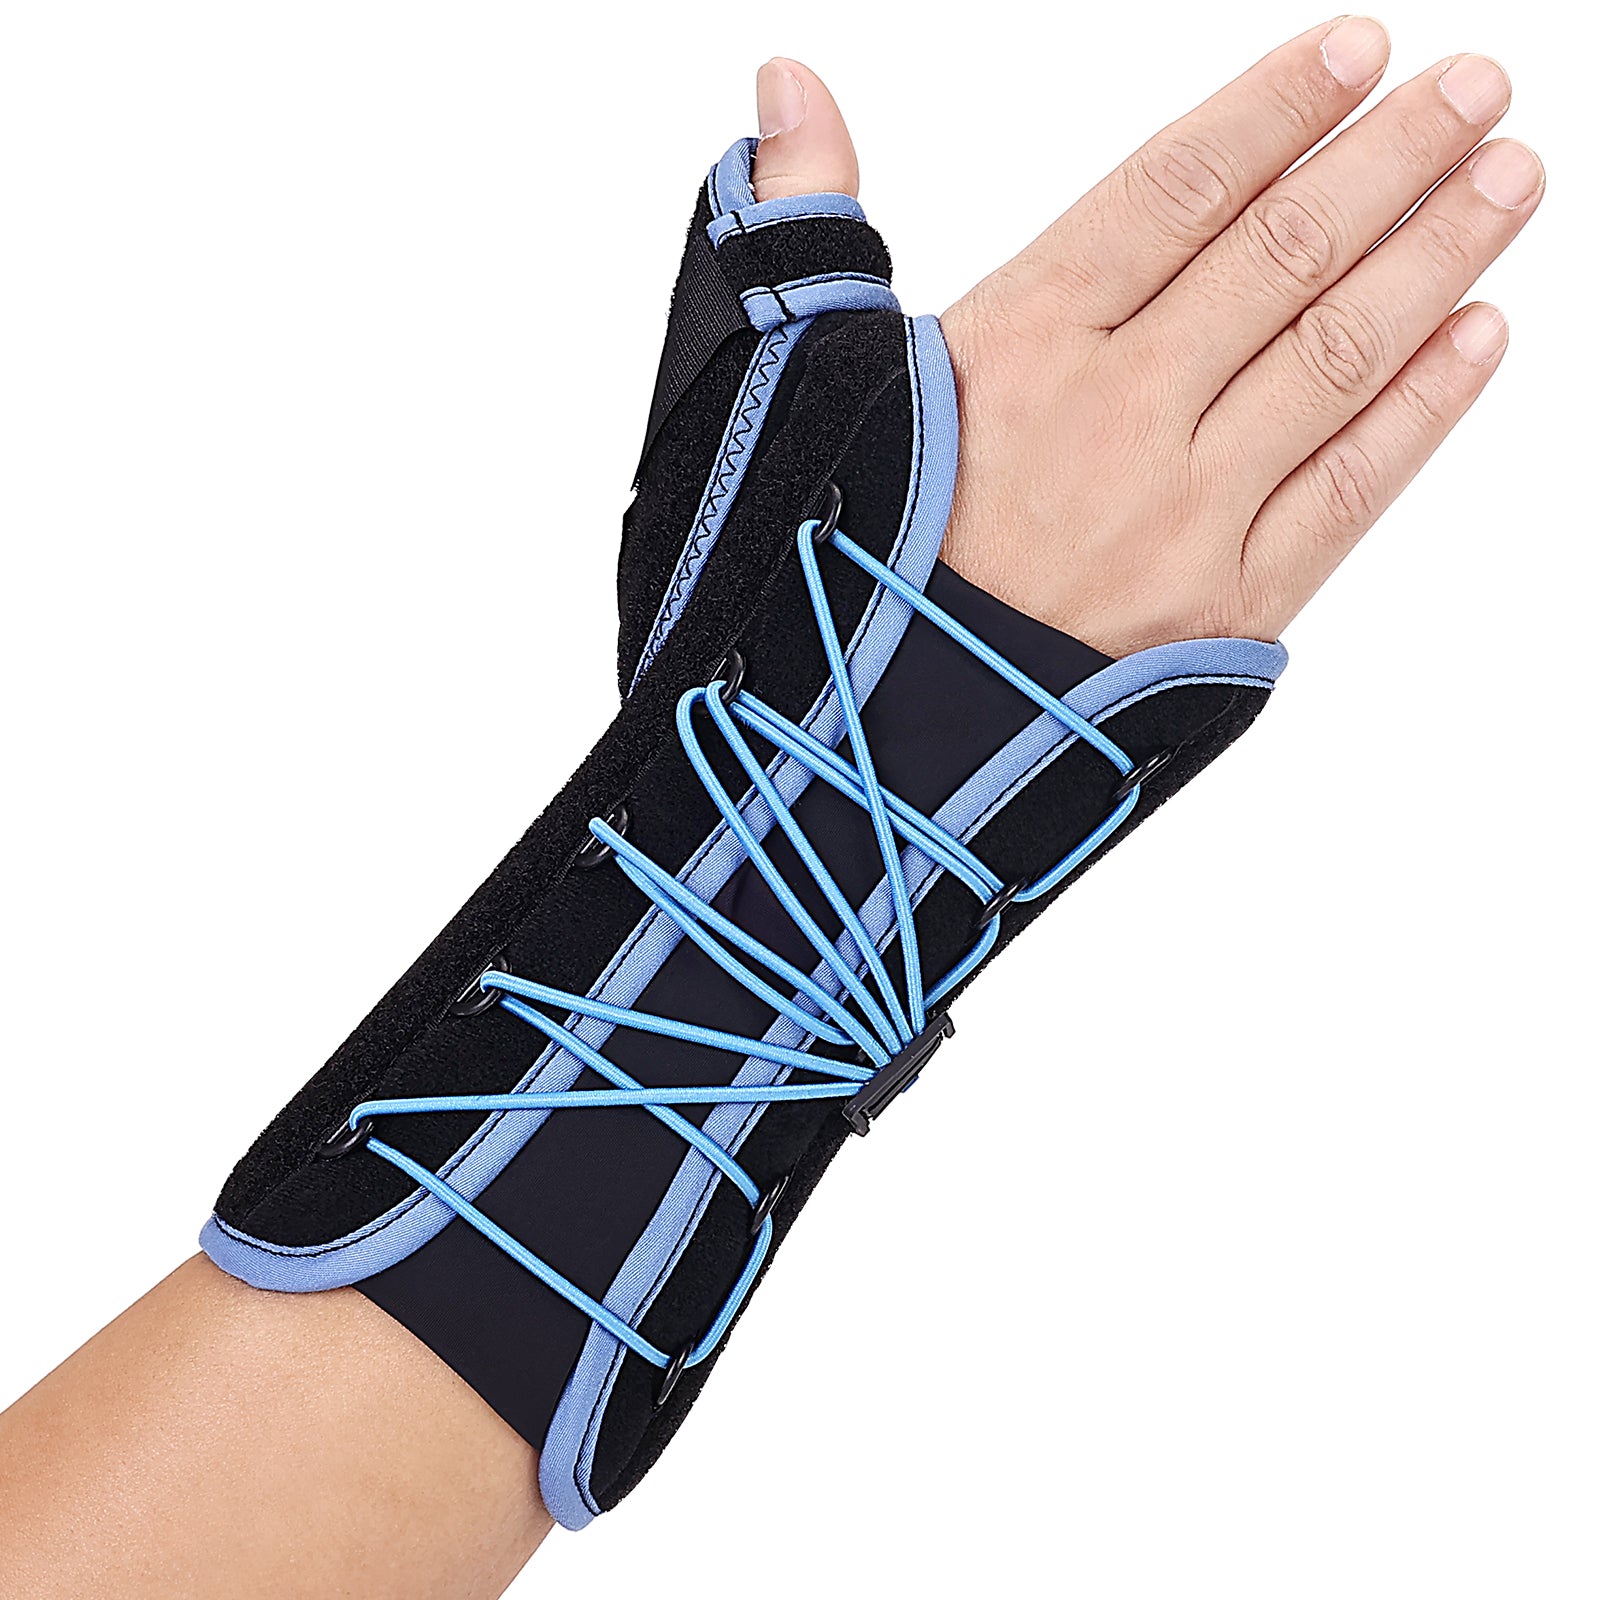 VP0902C VELPEAU Thumb Wrist Brace with Spica Splint Drawstring